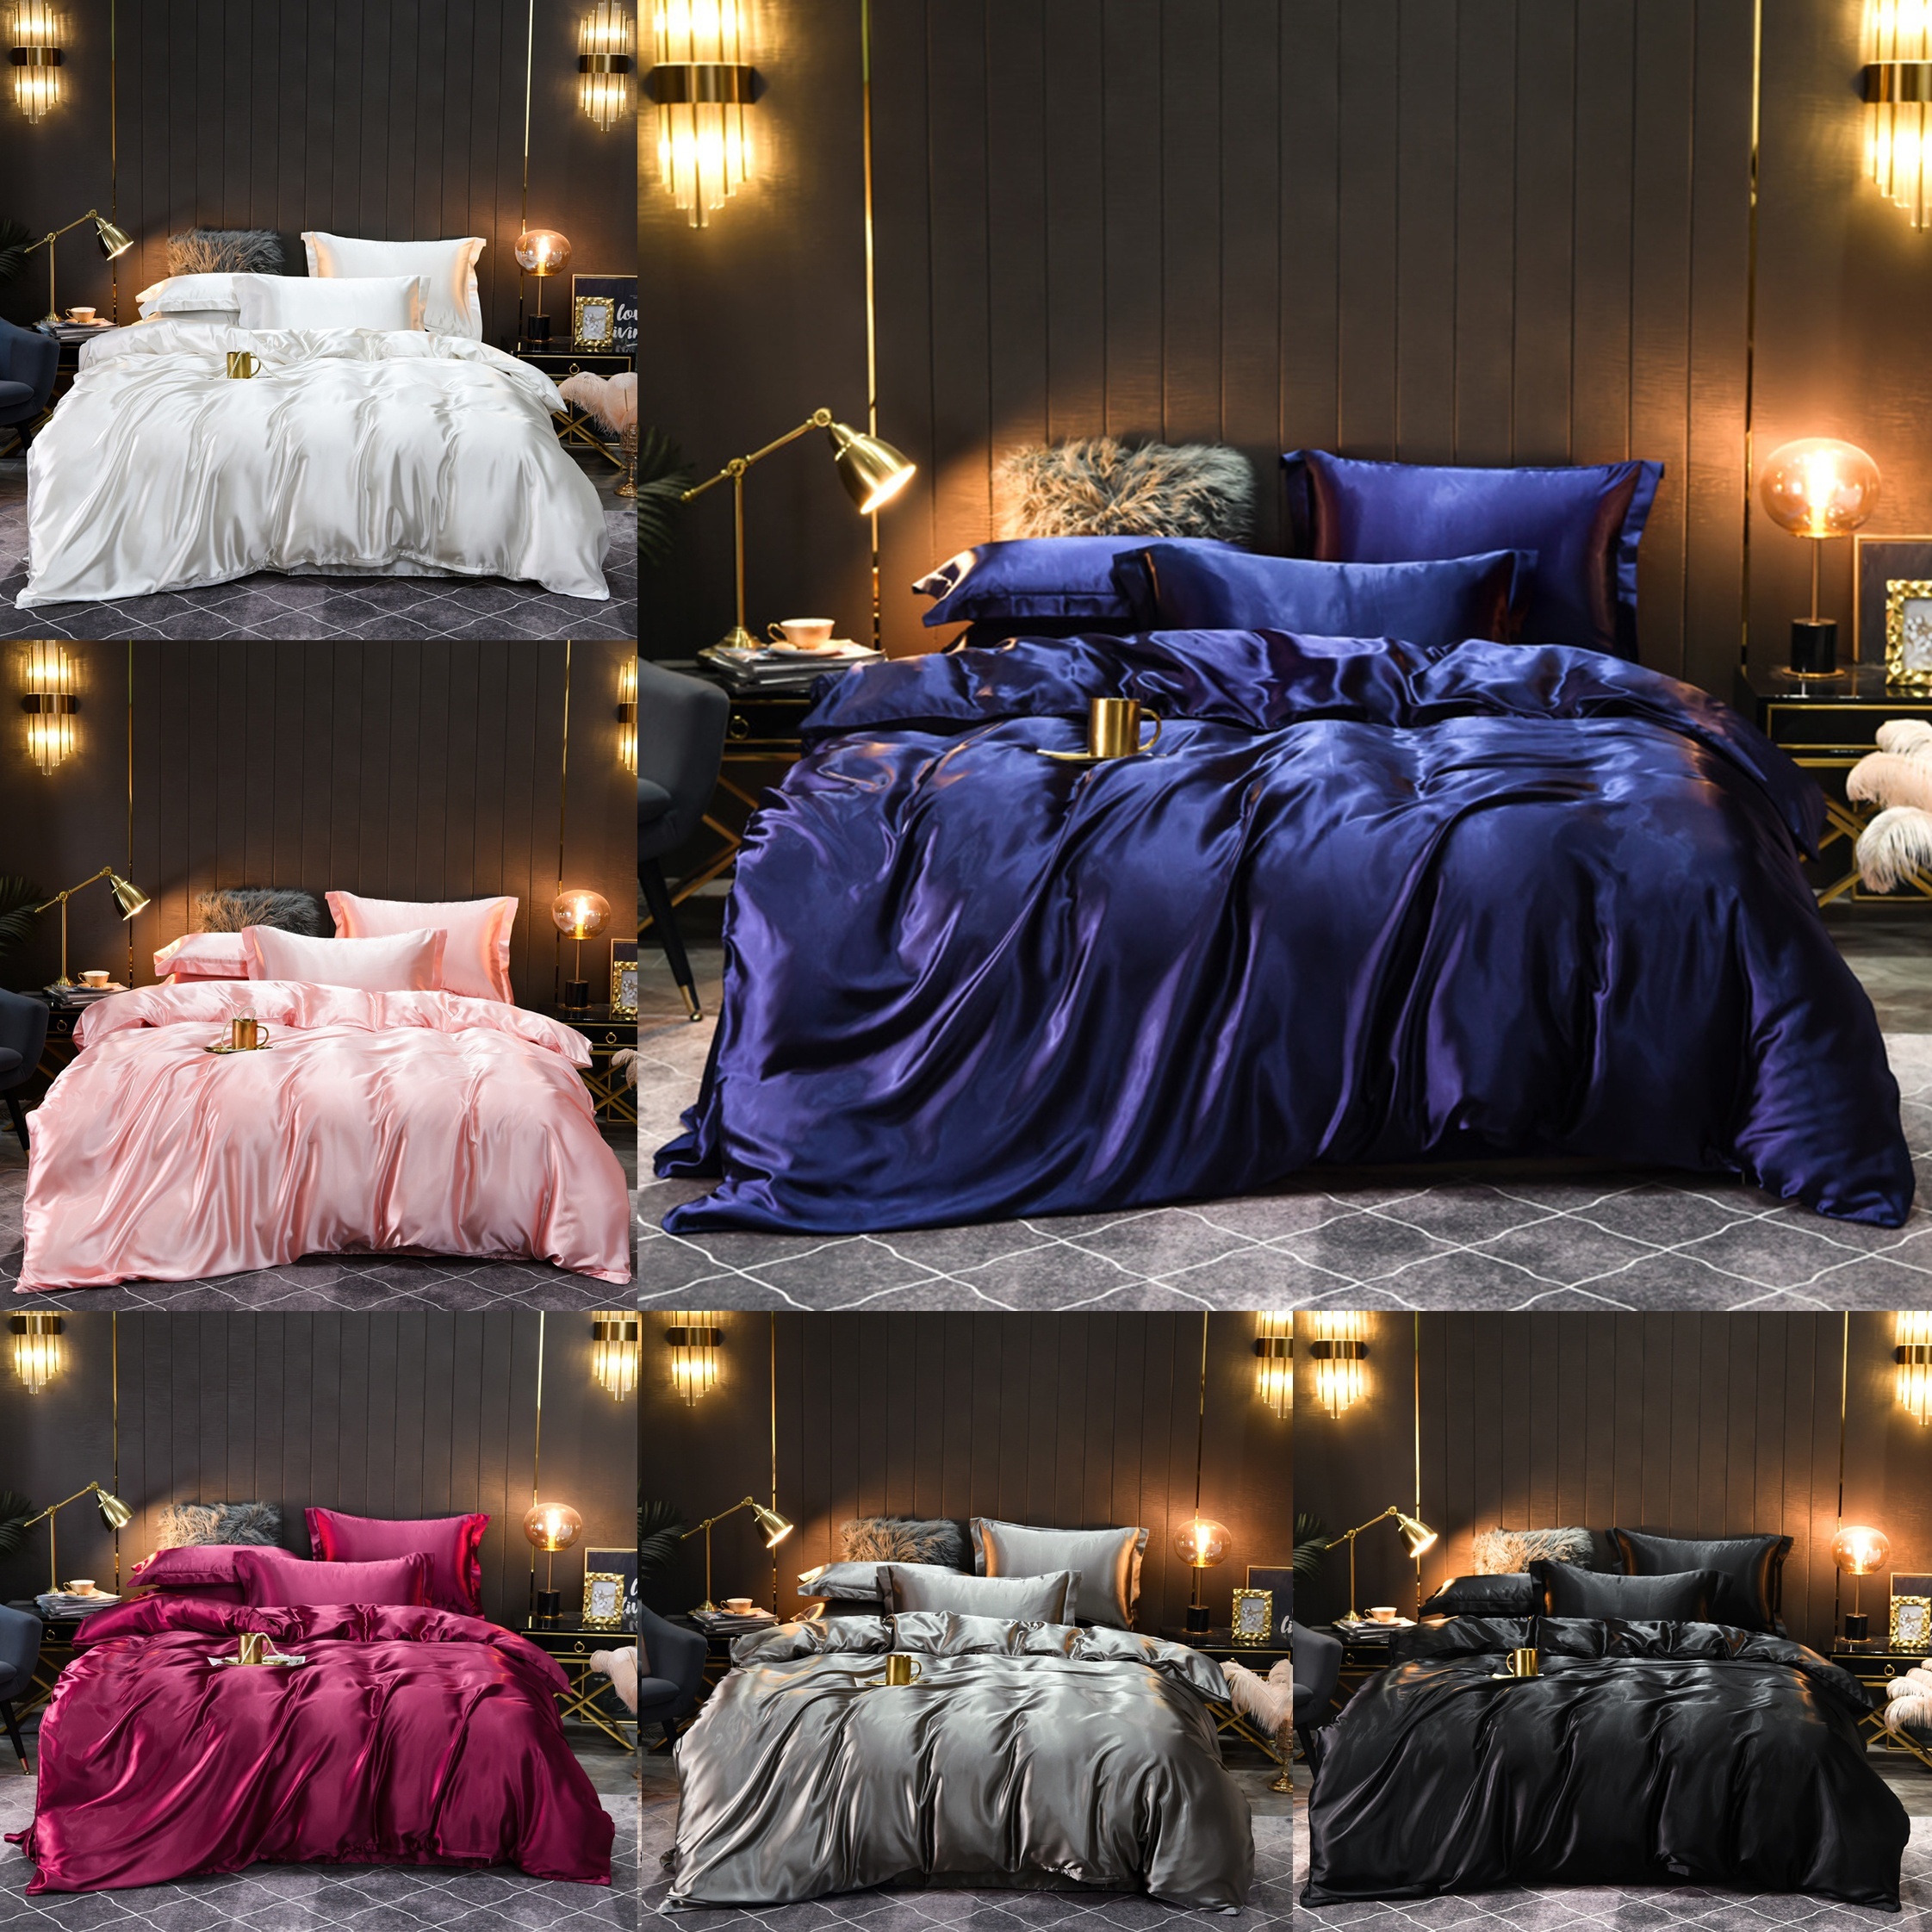 

3pcs Luxury Duvet Cover Set (1*duvet Cover + 2*pillowcases, Without Quilt And Pillow Core), Solid Color Satin Bedding Set, Soft Comfortable Duvet Cover, For Bedroom, Guest Room, Satin Duvet Cover Set